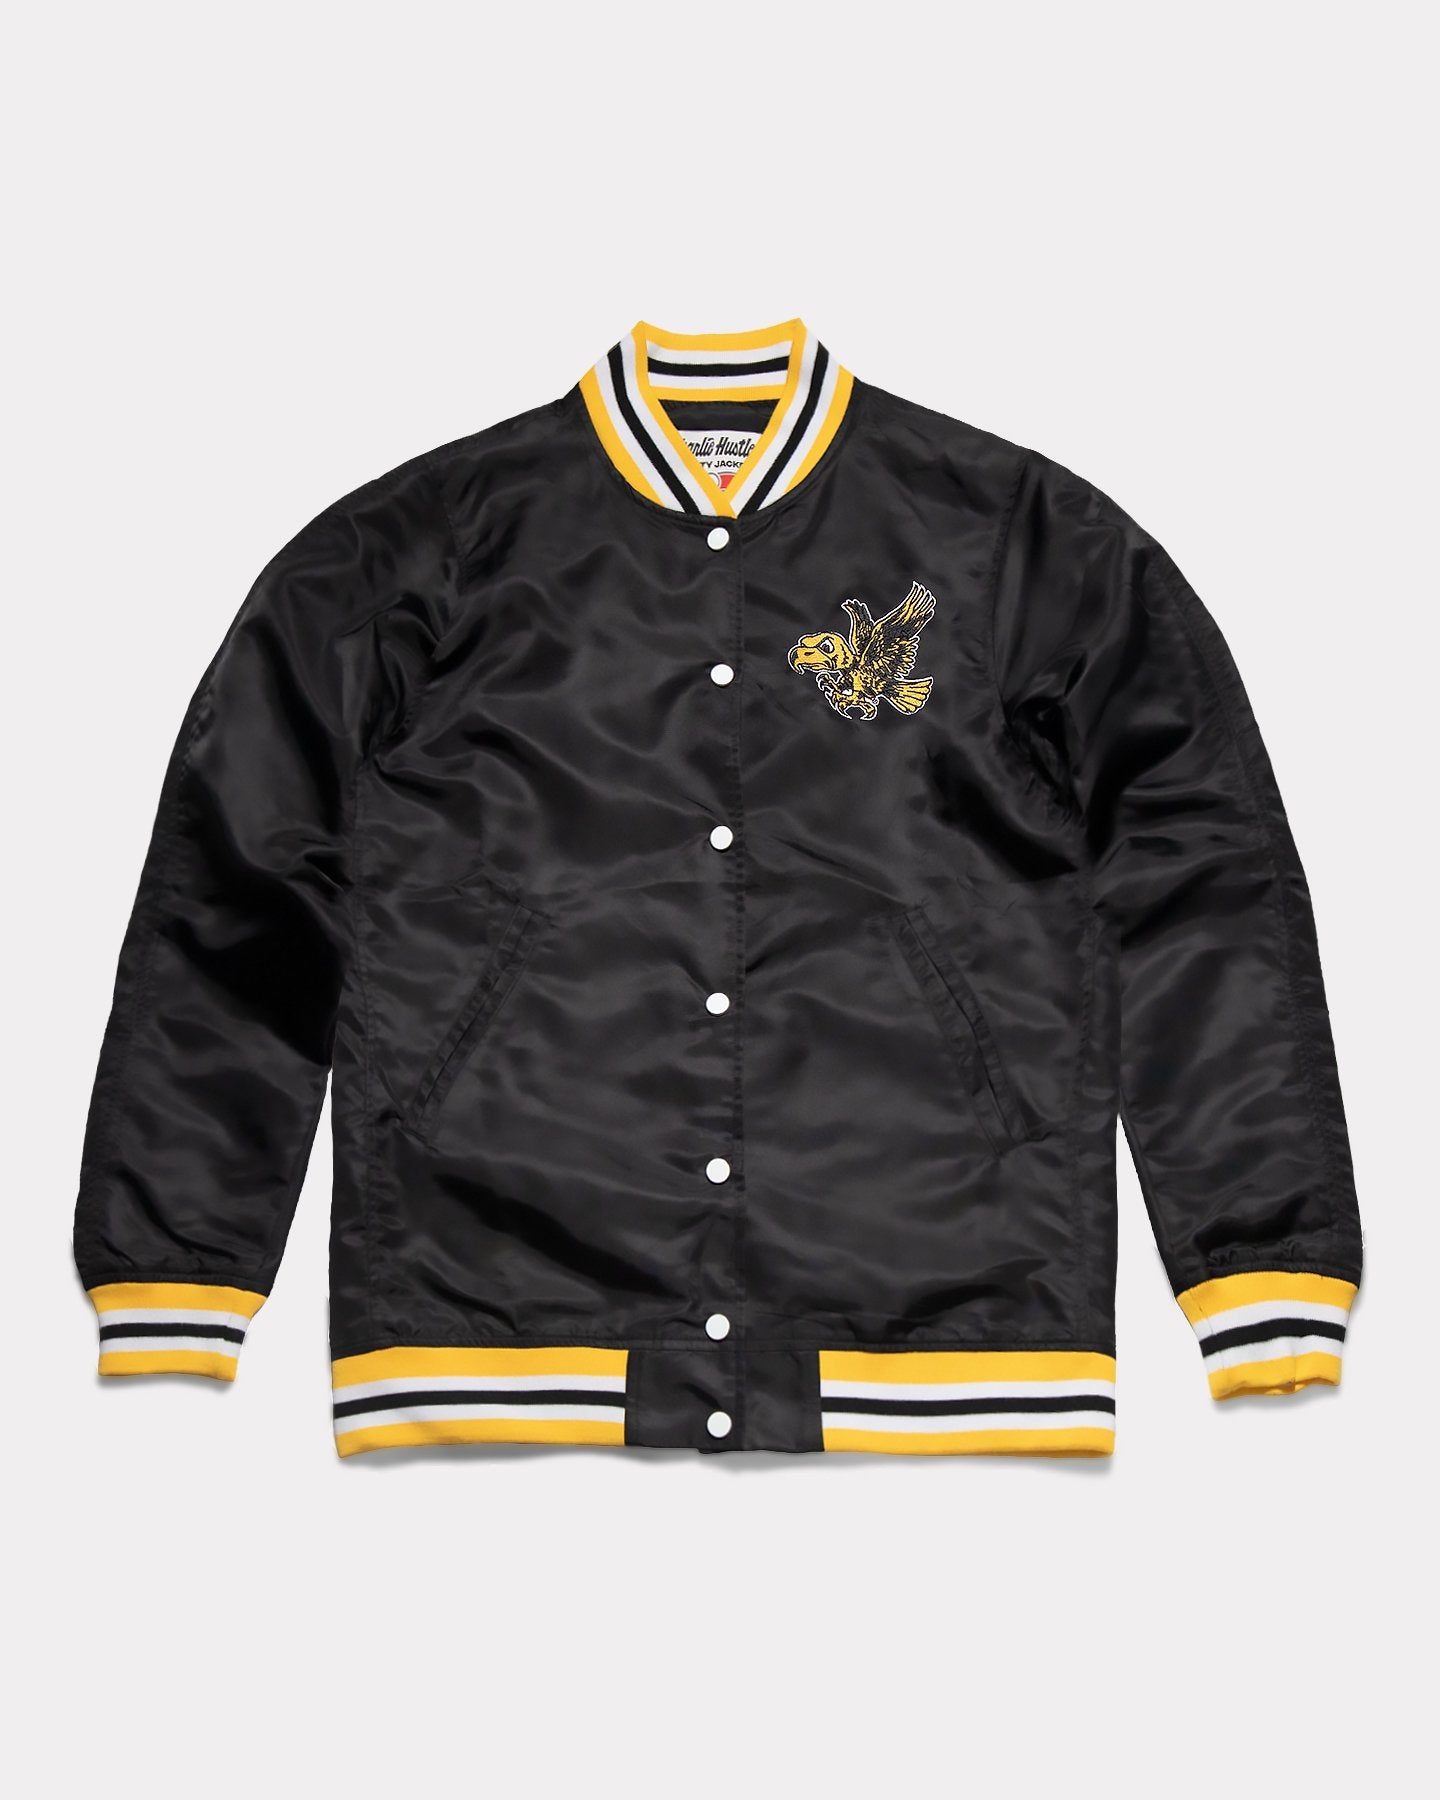 Maker of Jacket Custom Orders Design Yellow and Black Varsity